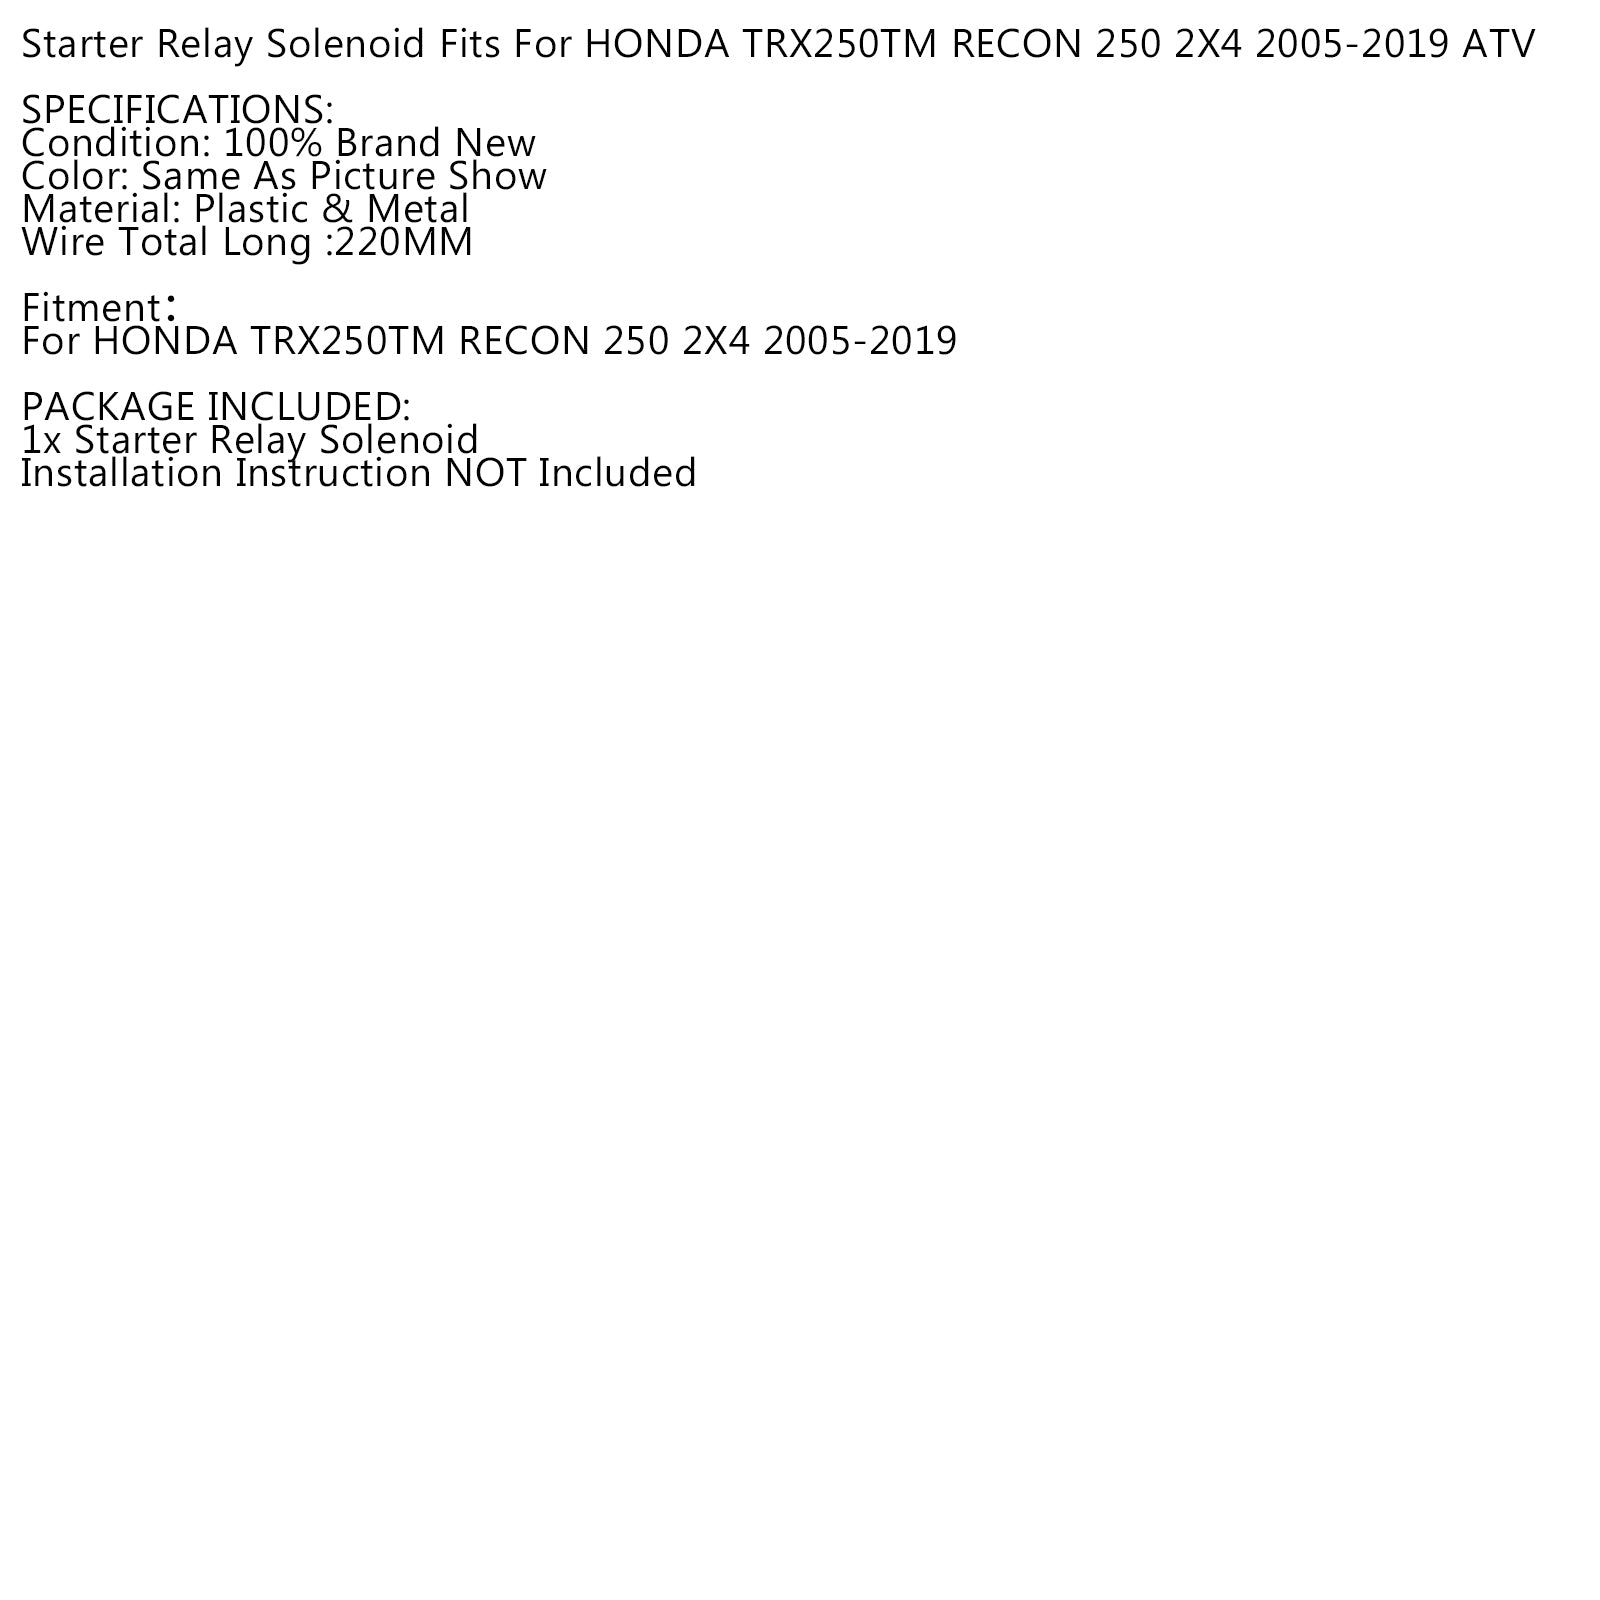 Starter Relay Solenoid For HONDA TRX250TM TRX250 TM RECON 250 2005-2019 2X4 ATV